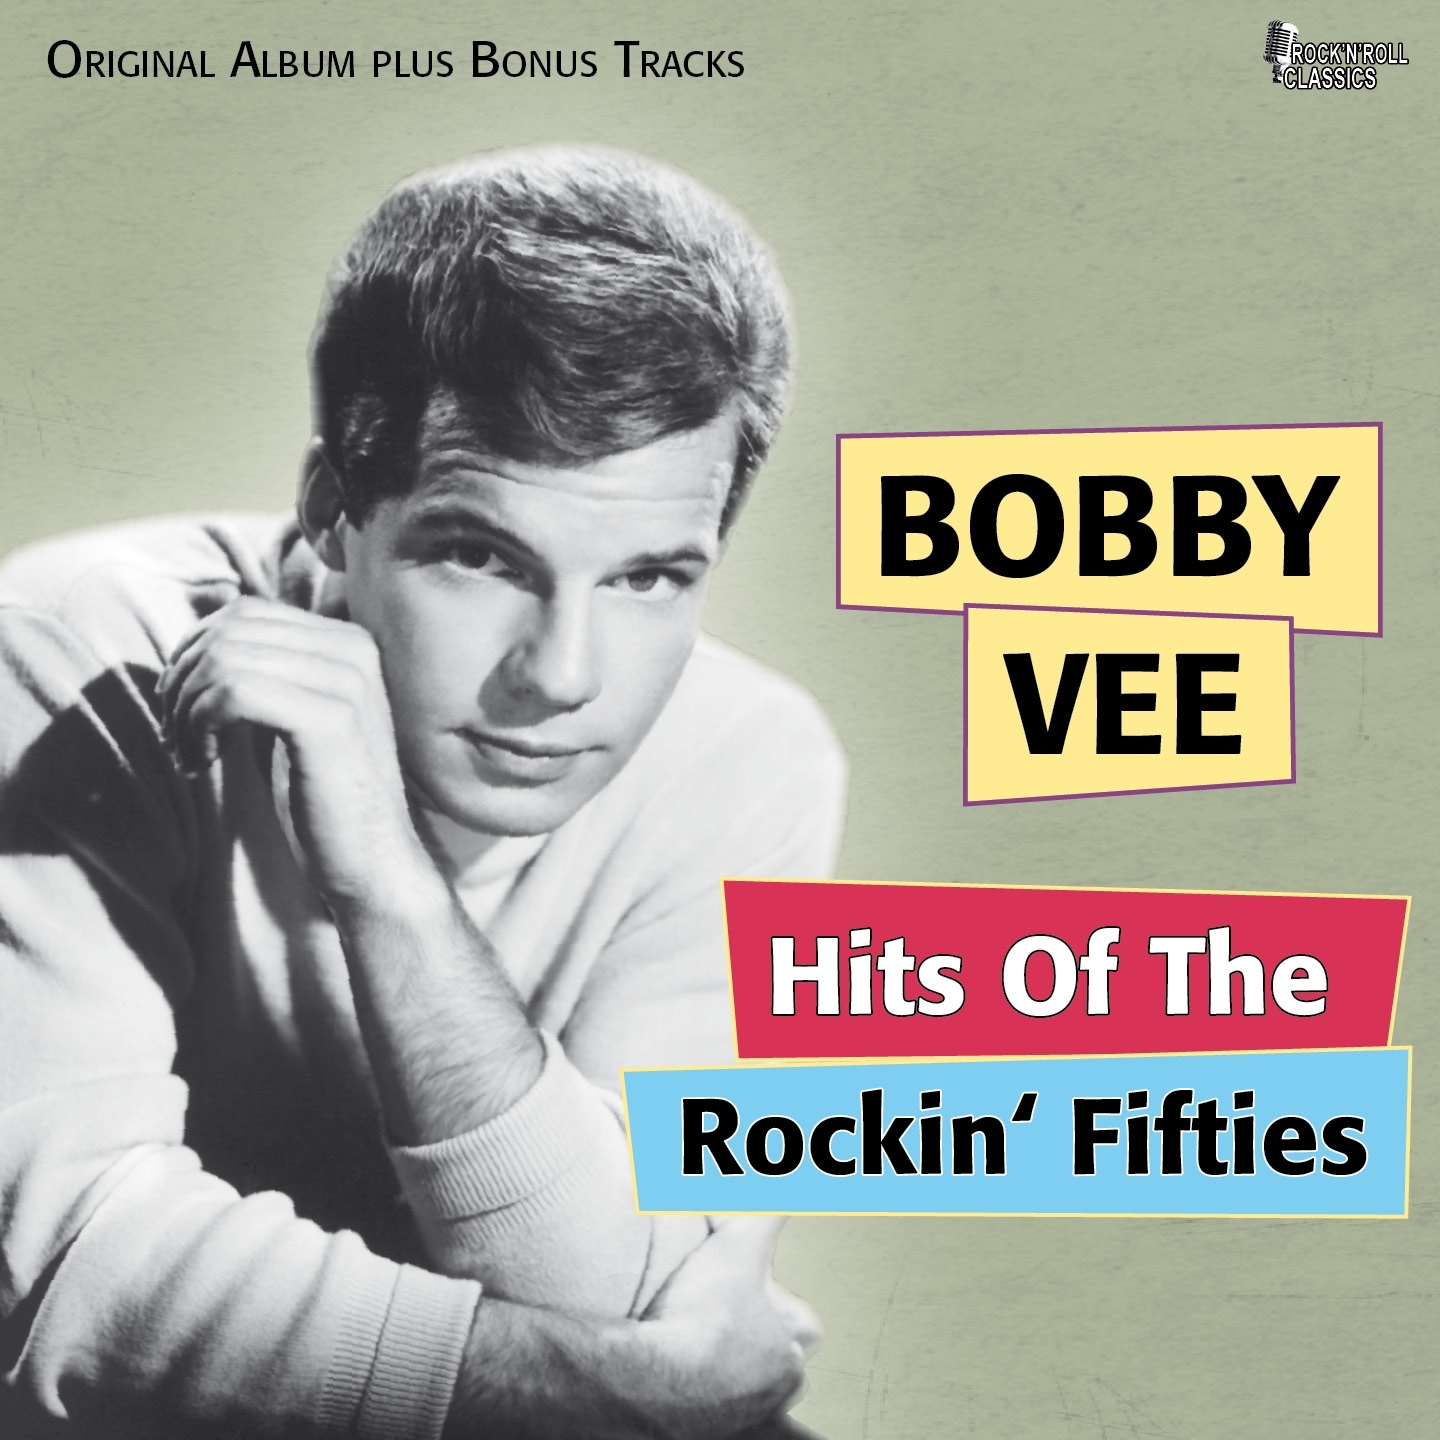 Hits of the Rockin' Fifties